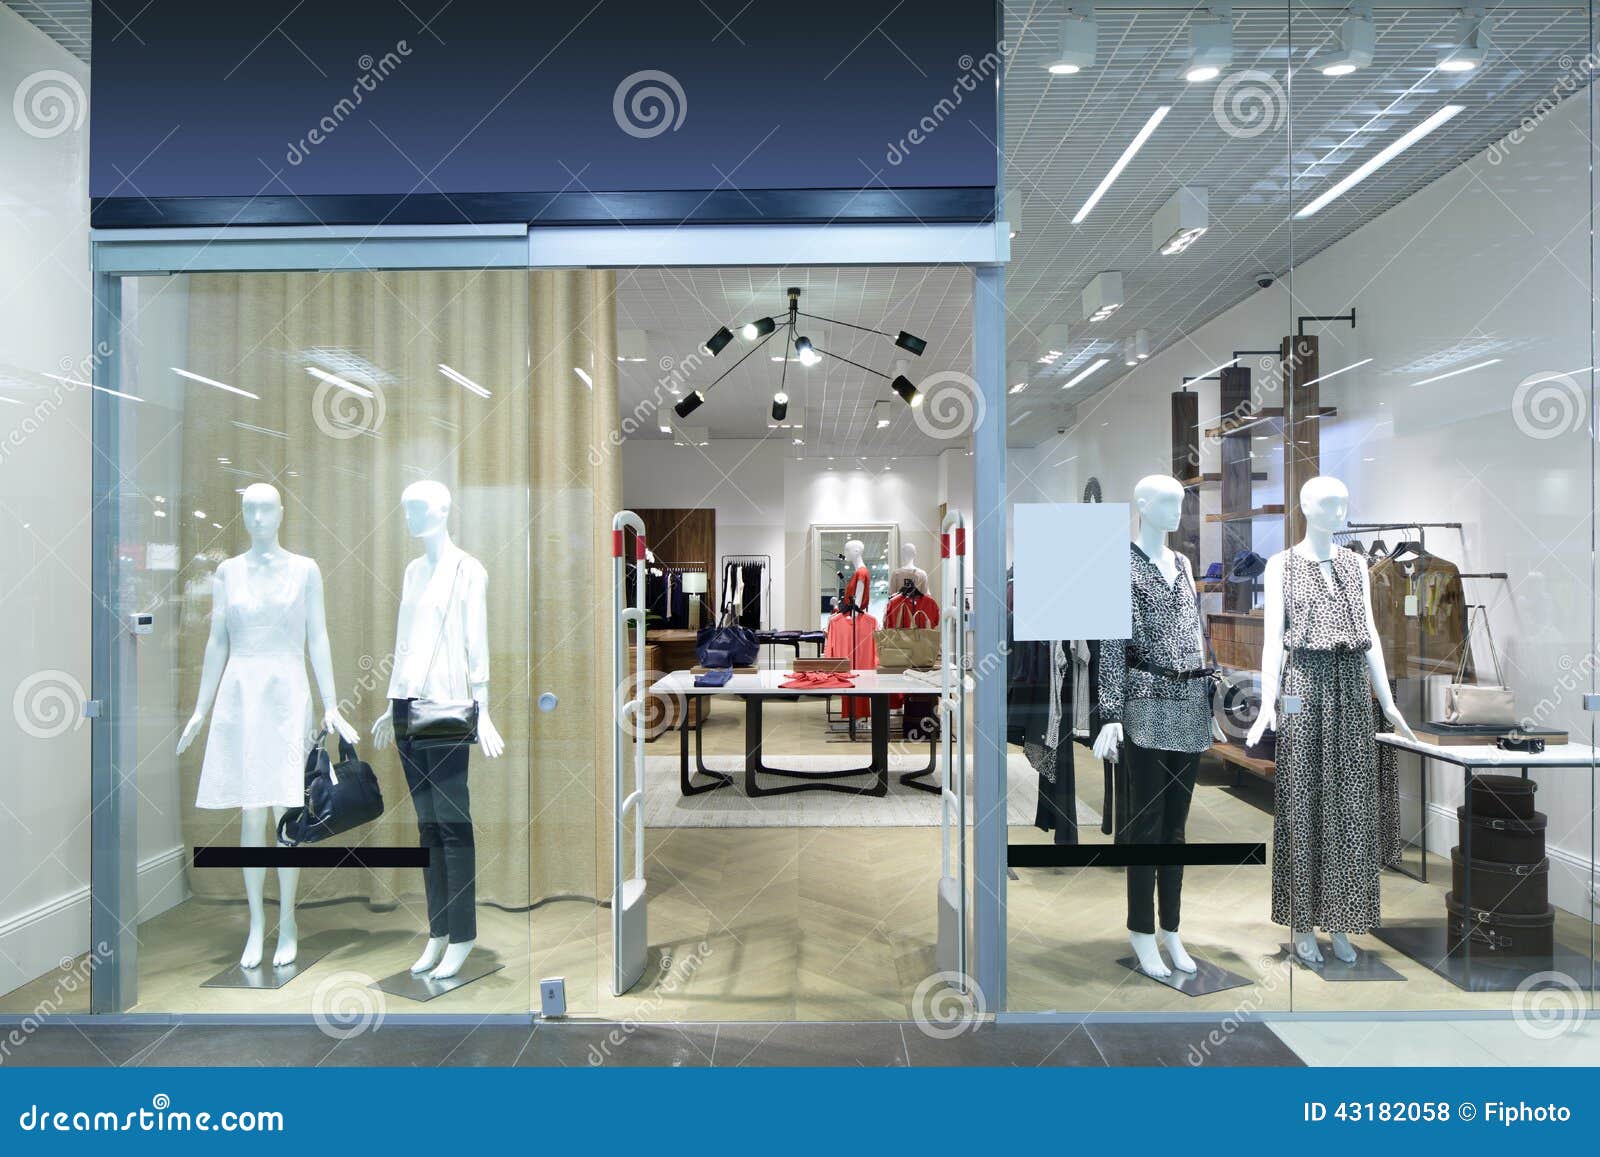 Window of Beautiful European Store Stock Photo - Image of industry ...